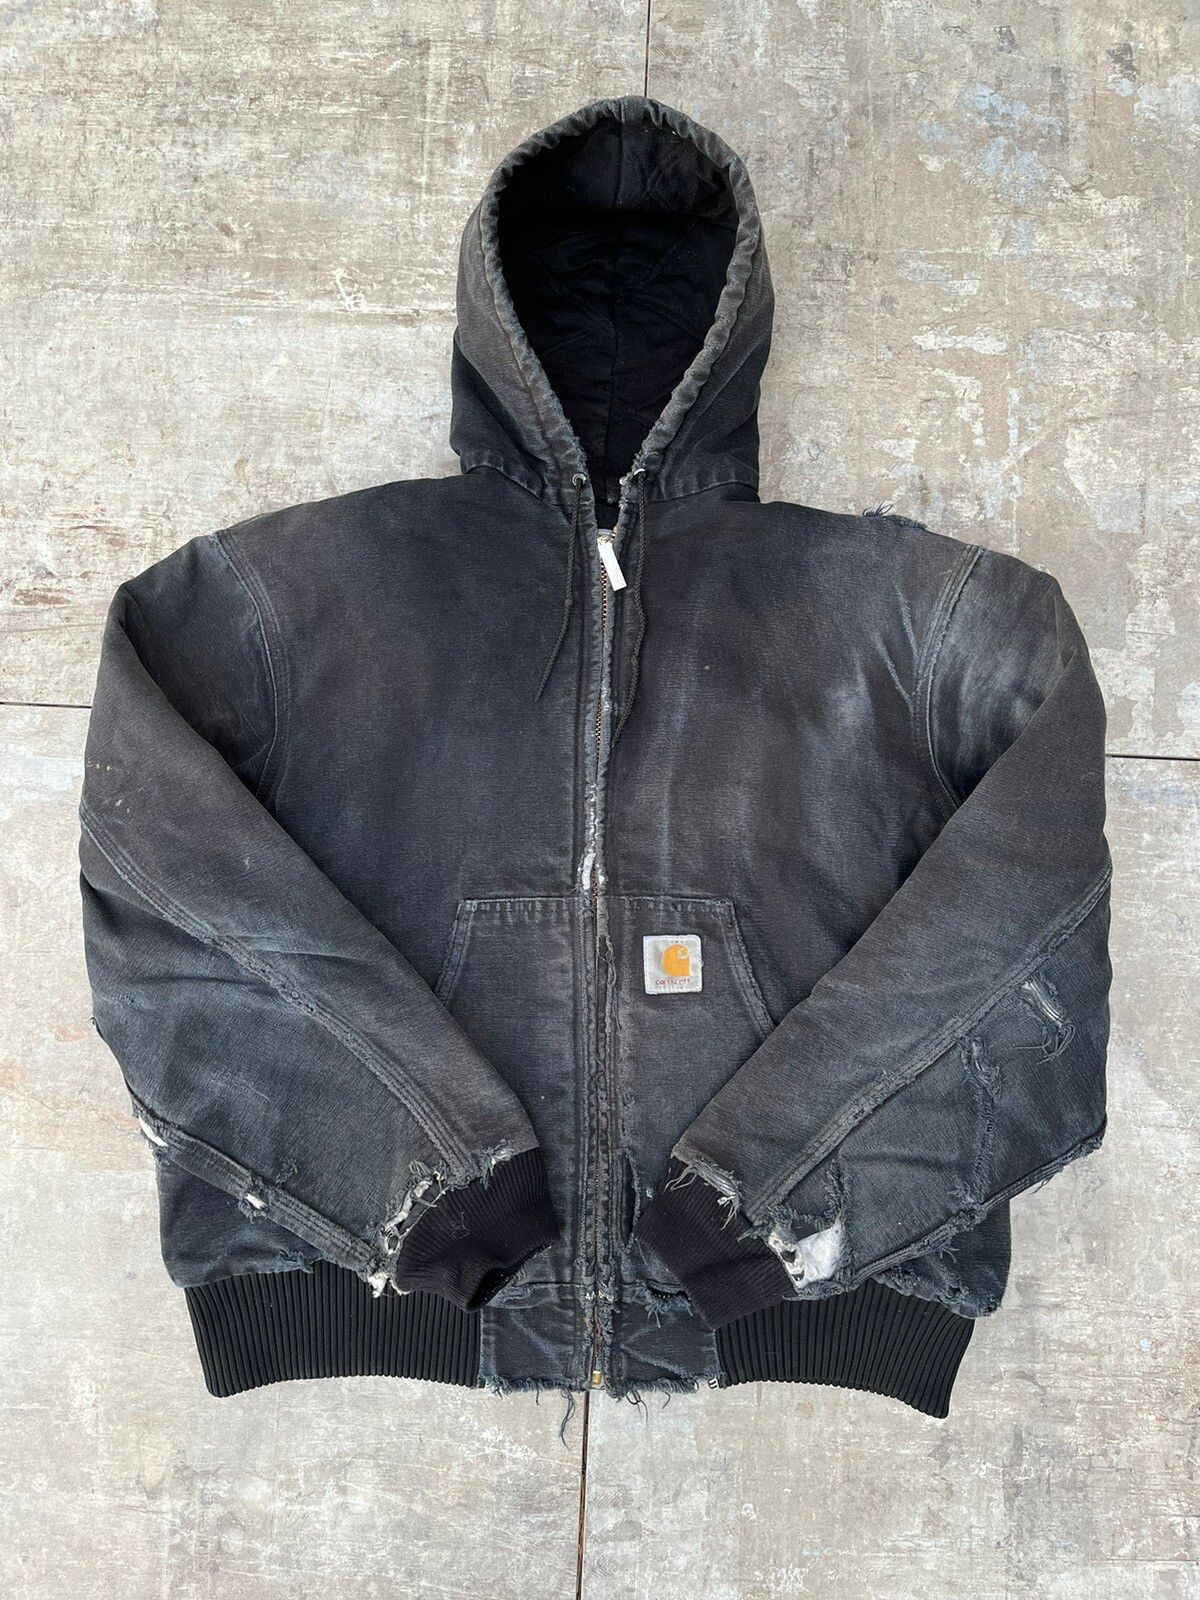 Vintage Vintage 90s Faded Black Carhartt Work Jacket Size US L / EU 52-54 / 3 - 5 Thumbnail